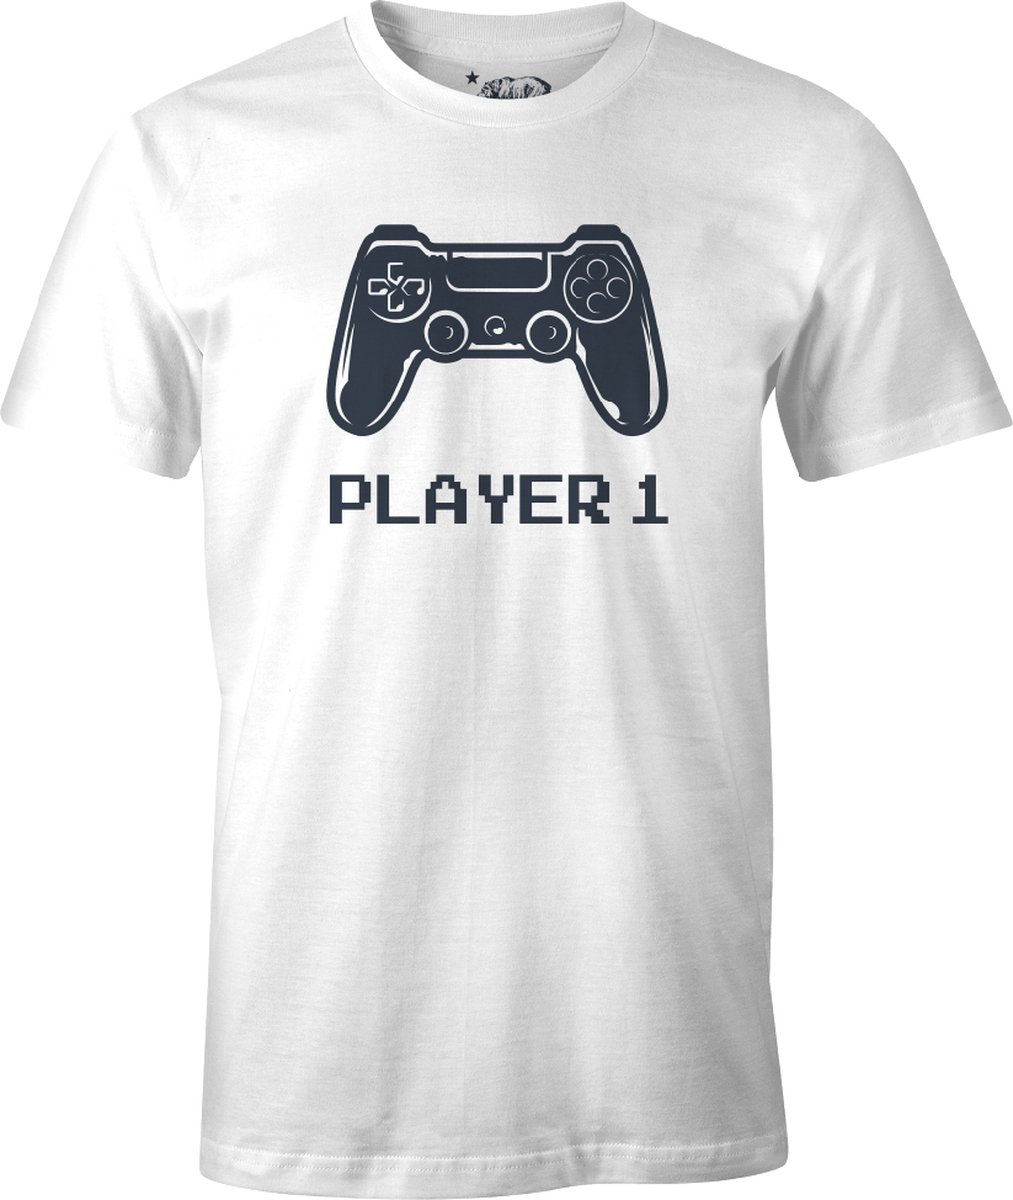 Gaming - Player 1 T-Shirt White - S